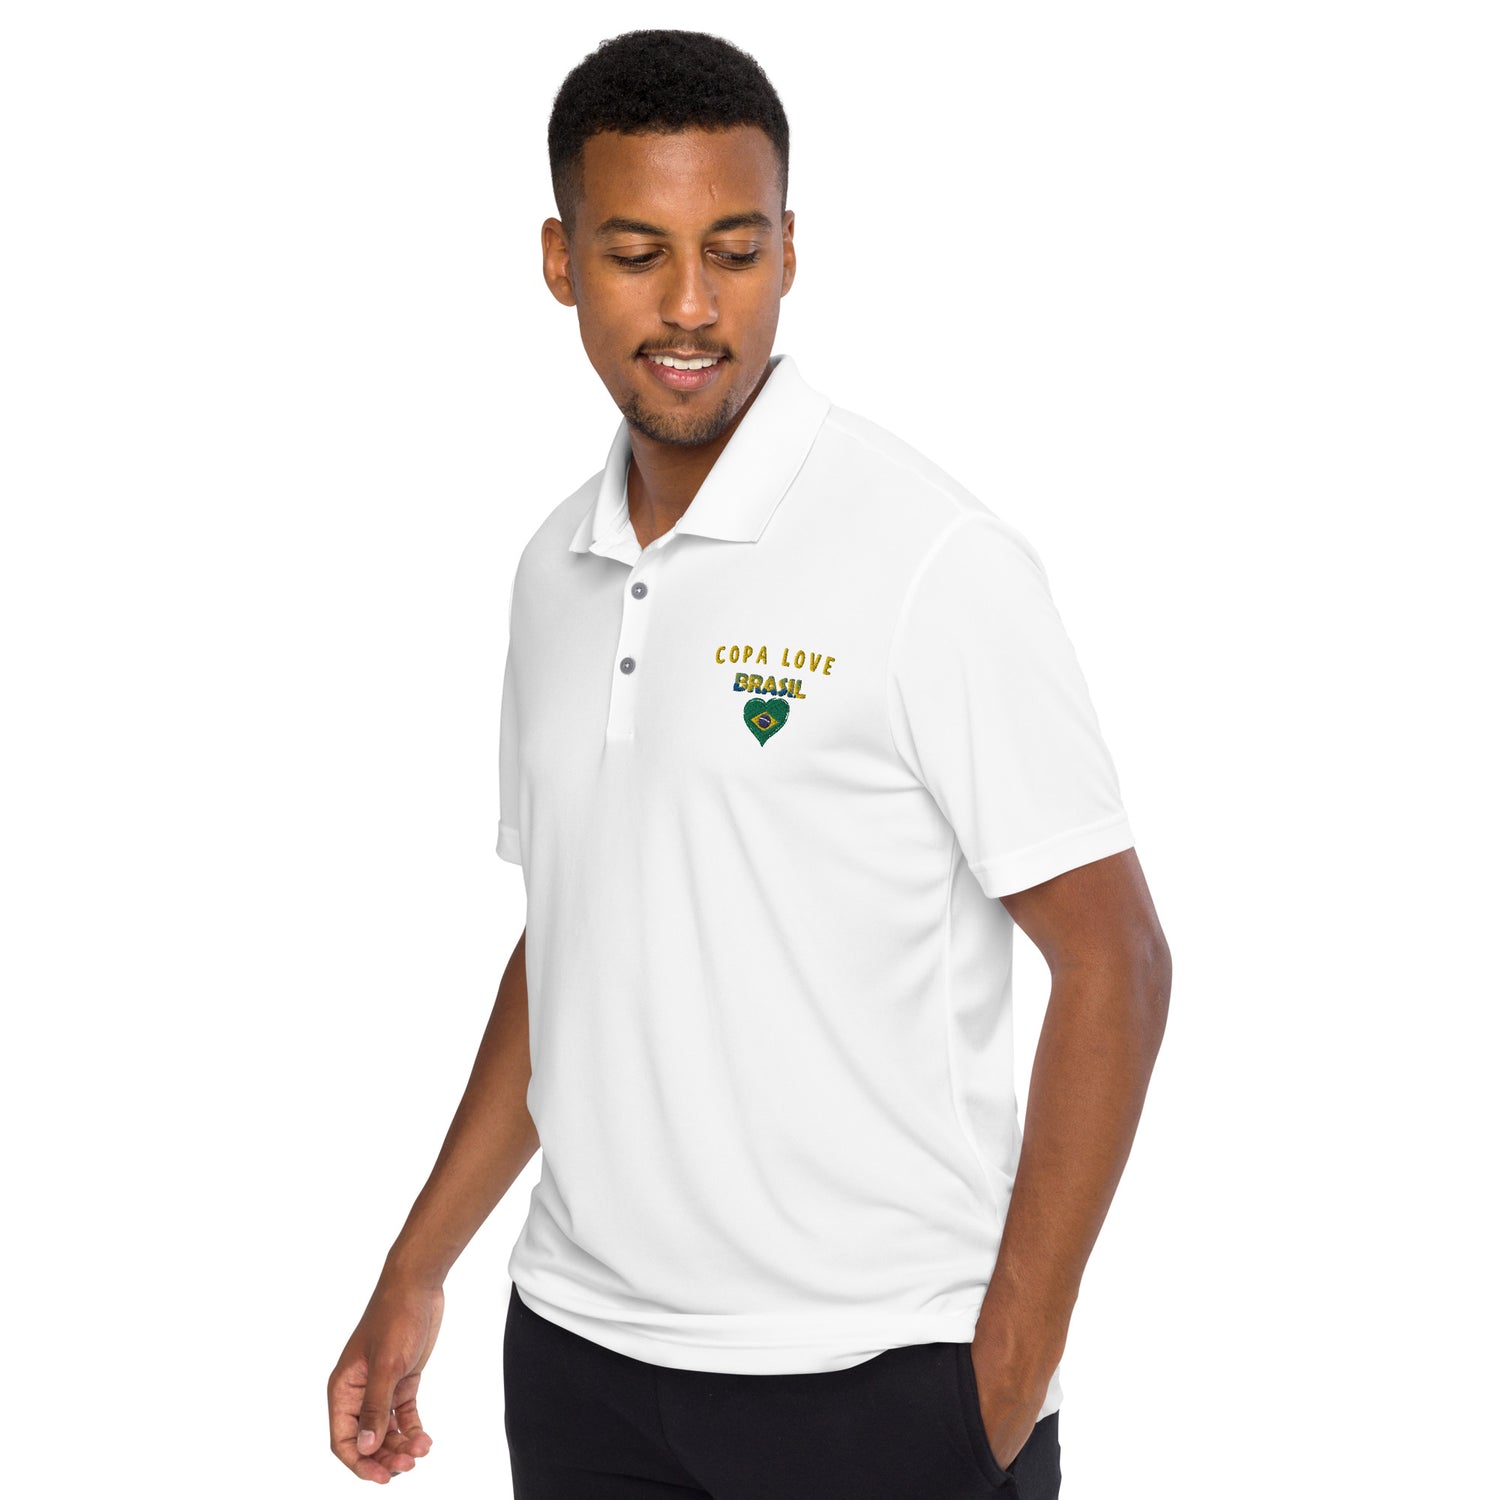 BRASIL - Adidas performance polo shirt